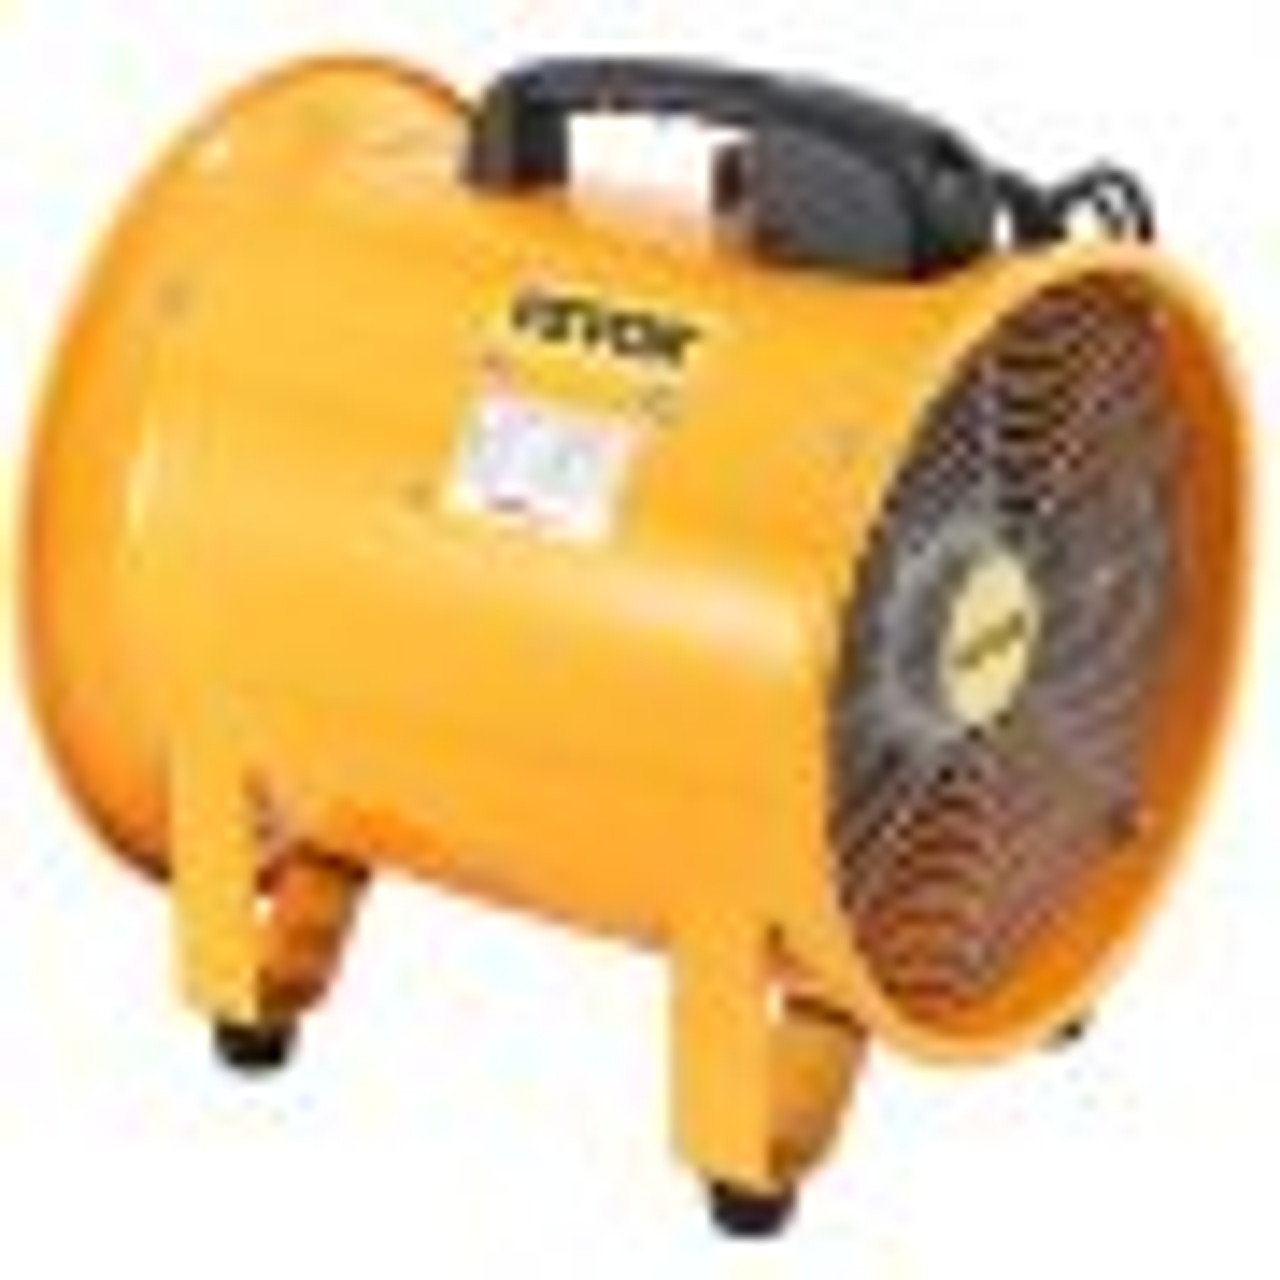 VEVOR Utility Blower Fan, 12 Inches, 550W 2720 CFM High Velocity